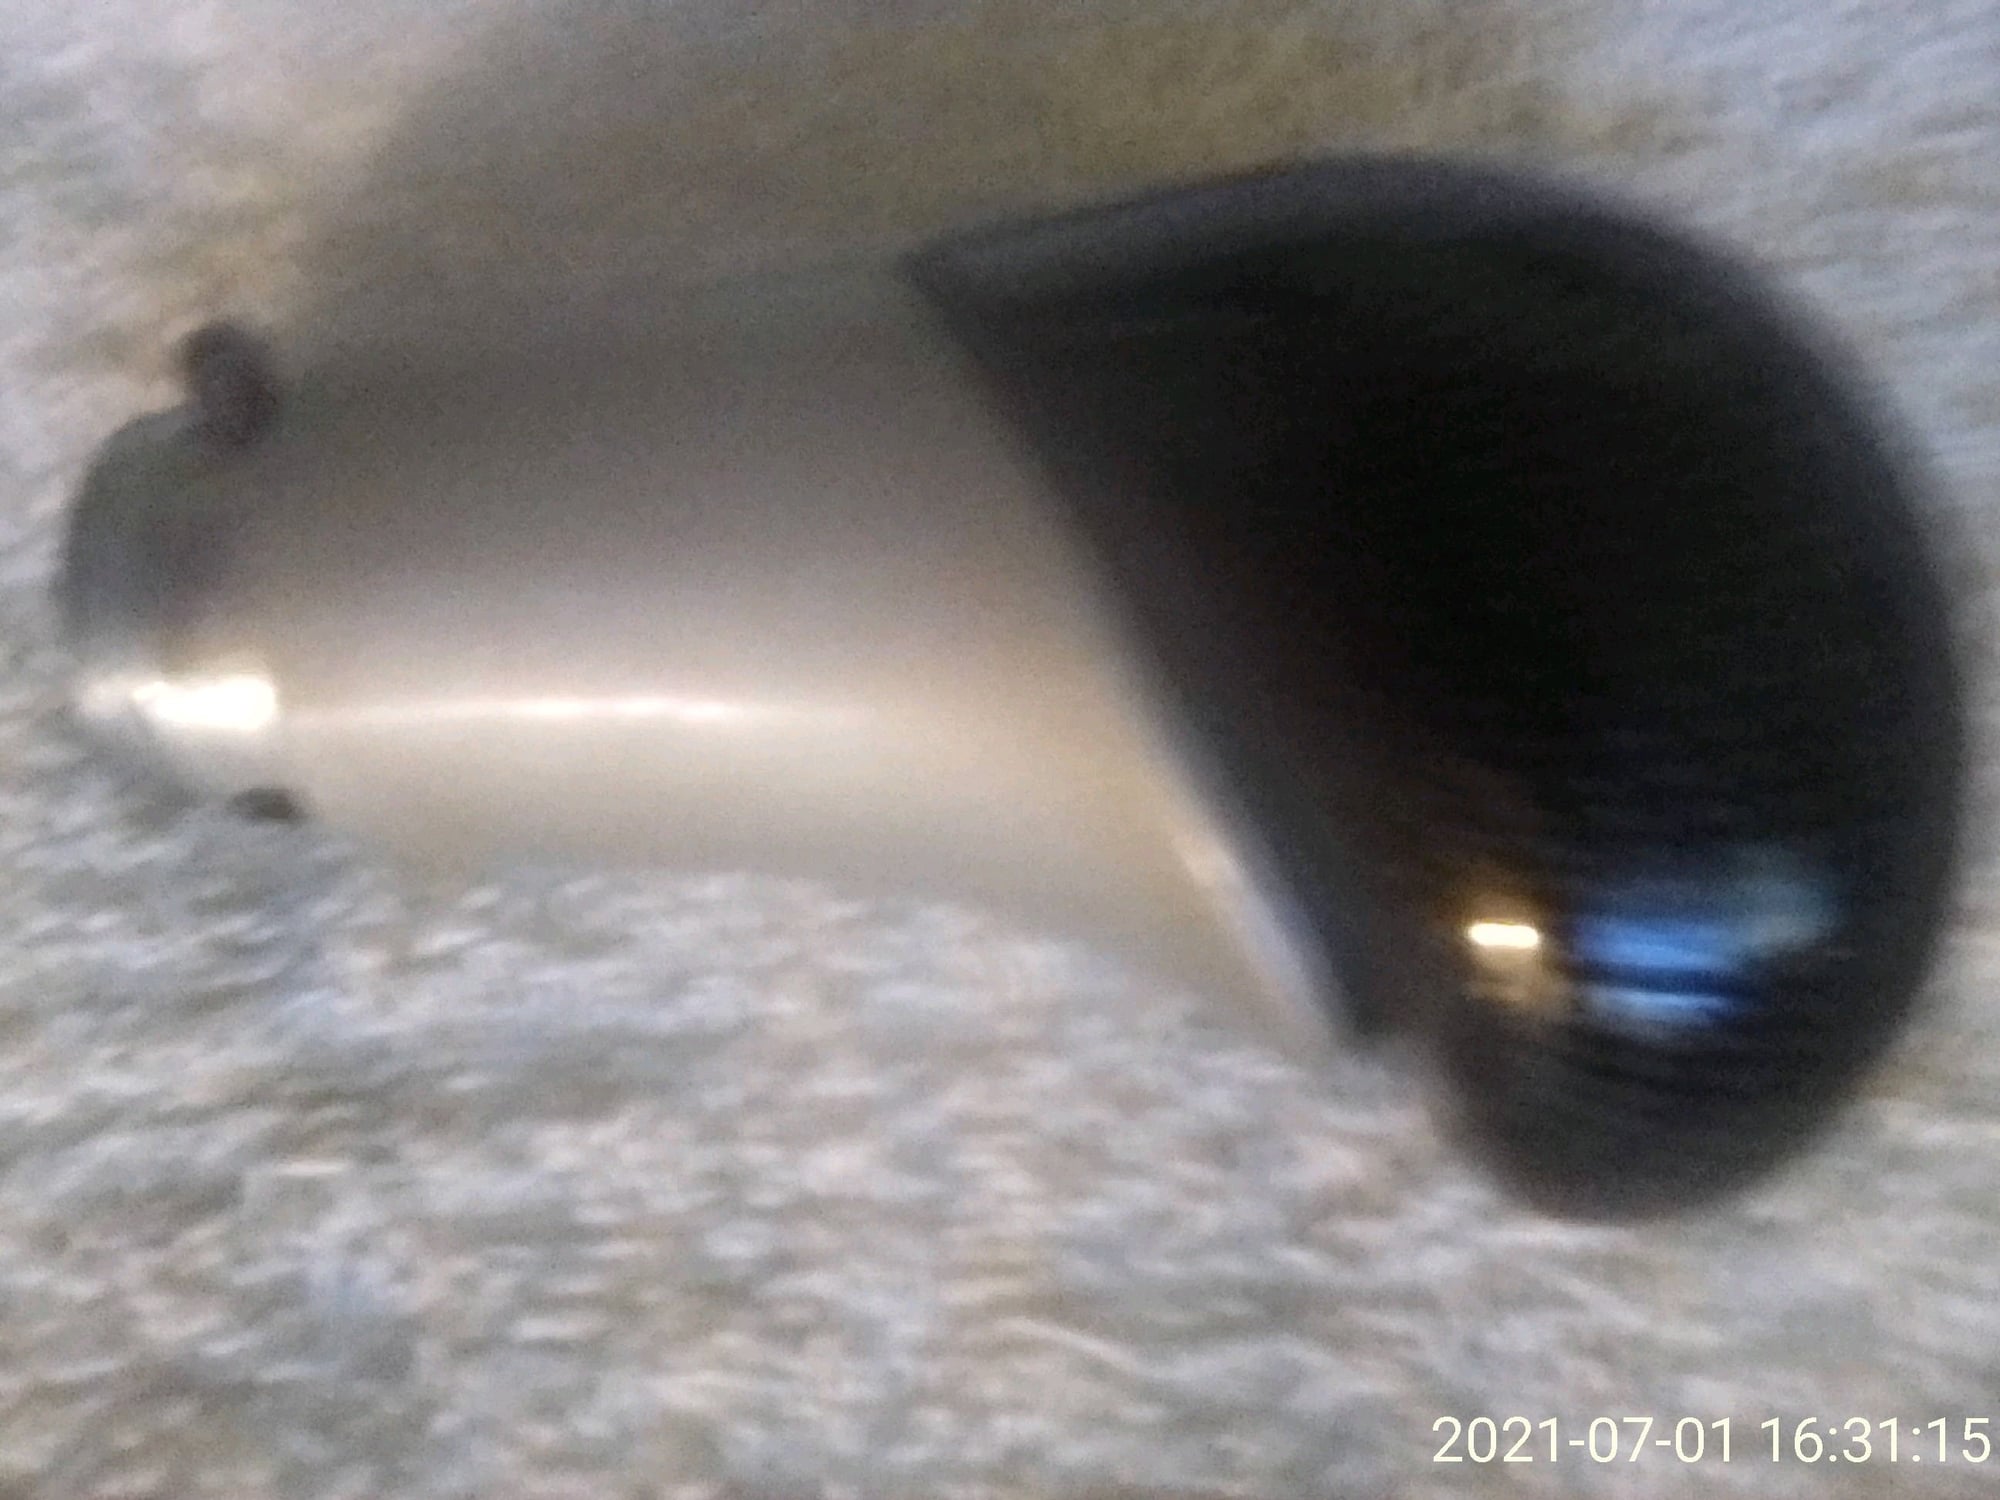 Accessories - Momo - Shadow Model Shift Knob - Used - 1993 to 2002 Mazda RX-7 - San Jose, CA 95121, United States